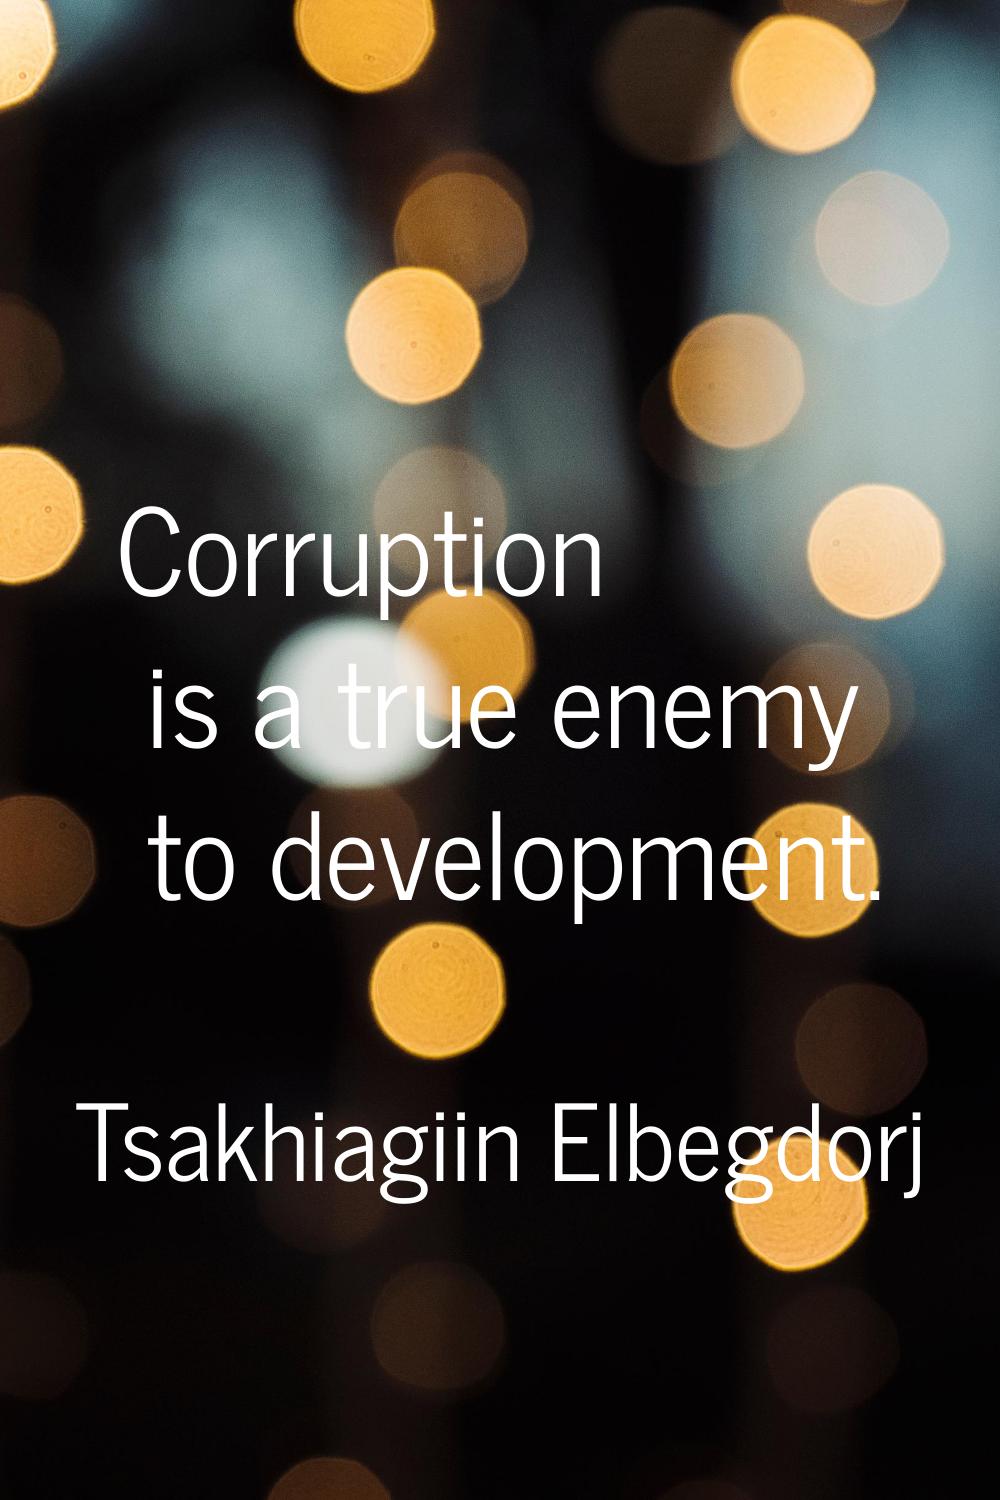 Corruption is a true enemy to development.